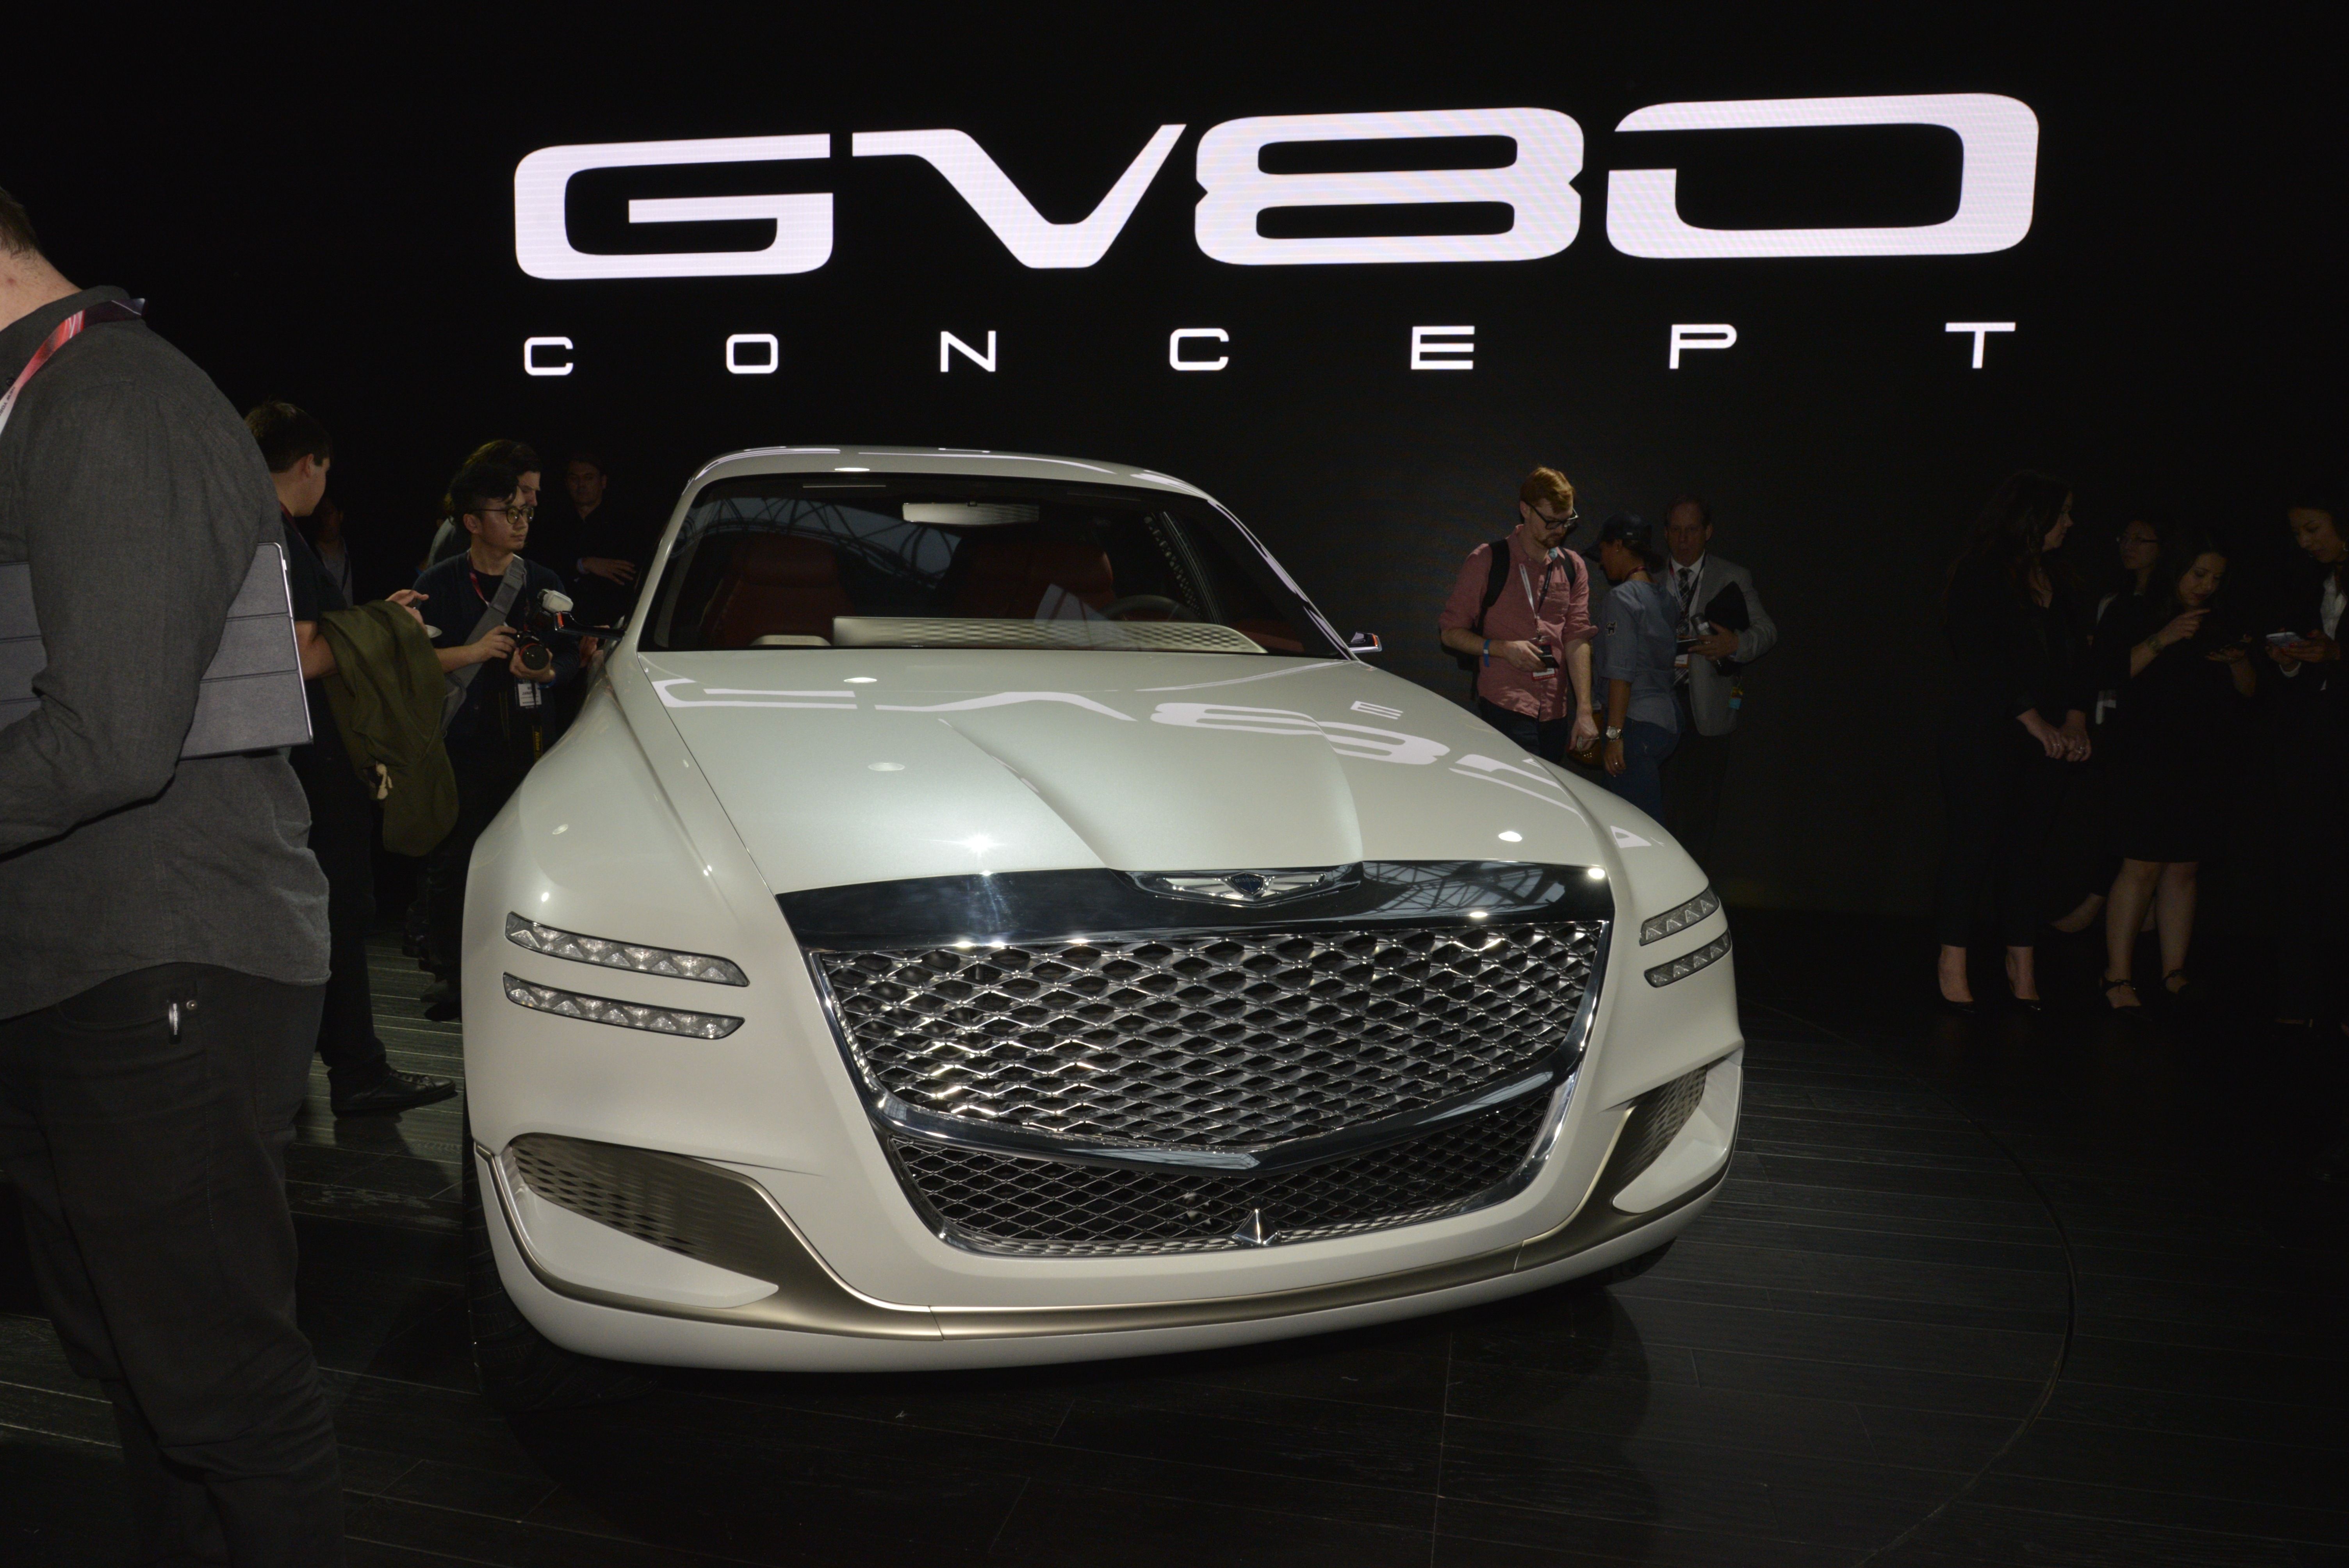 2017 Genesis Gv80 Concept